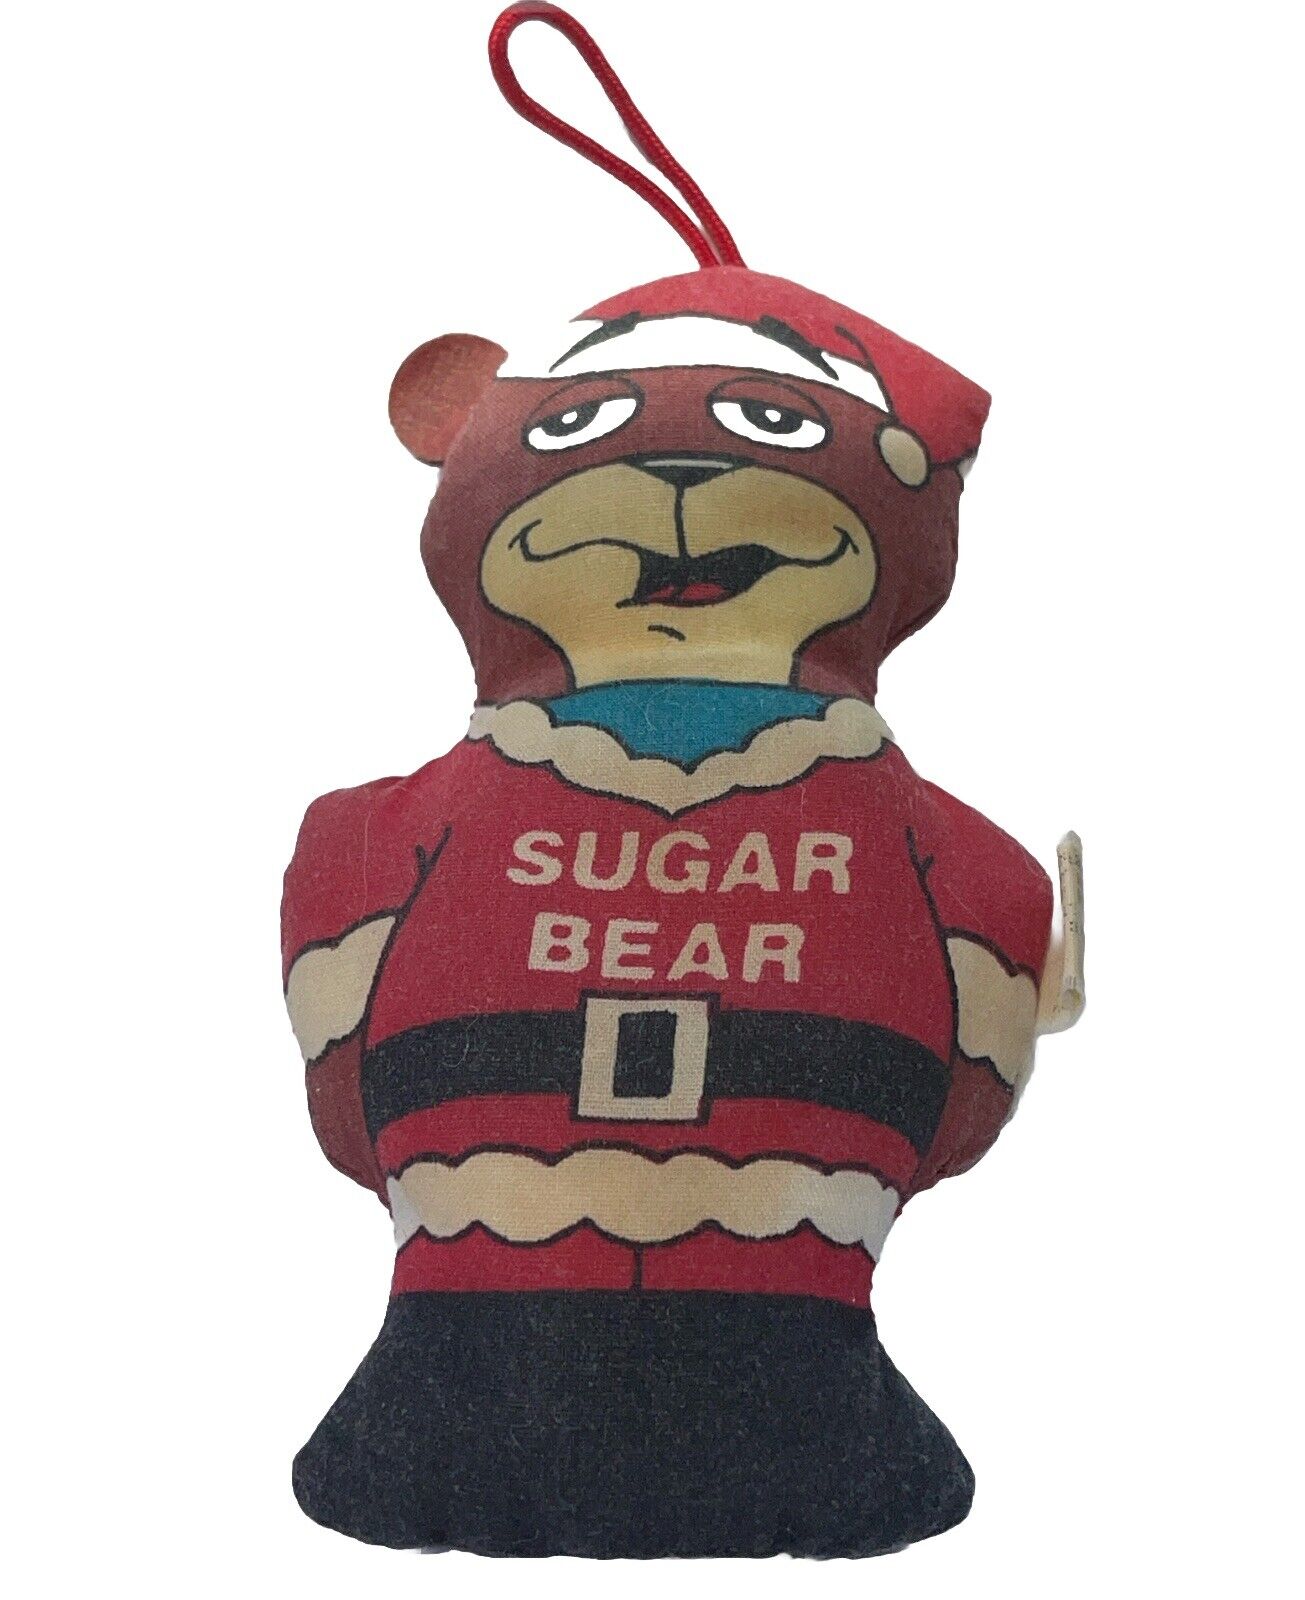 Vintage 1990 Sugar Bear POST Golden Crisp Cereal Plush Ad Ornament No Sound